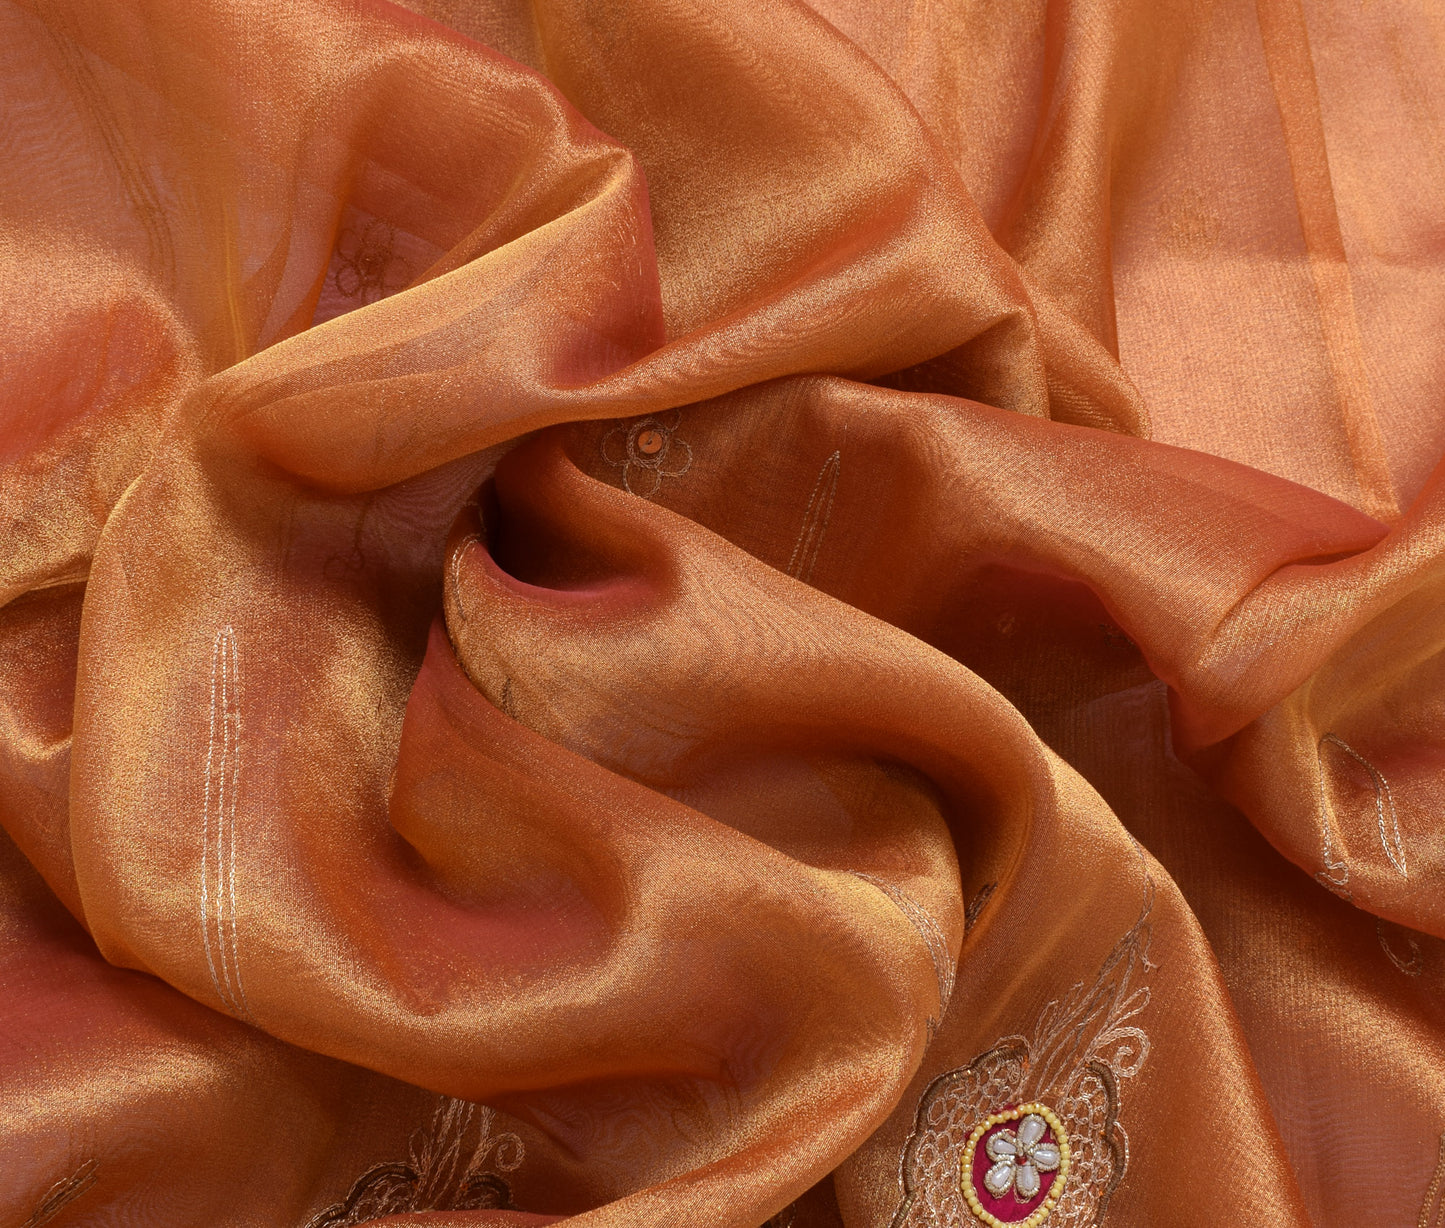 Sushila Vintage Golden Sari Blend Tissue Silk Embroidered Hand Beaded 5Yd Fabric